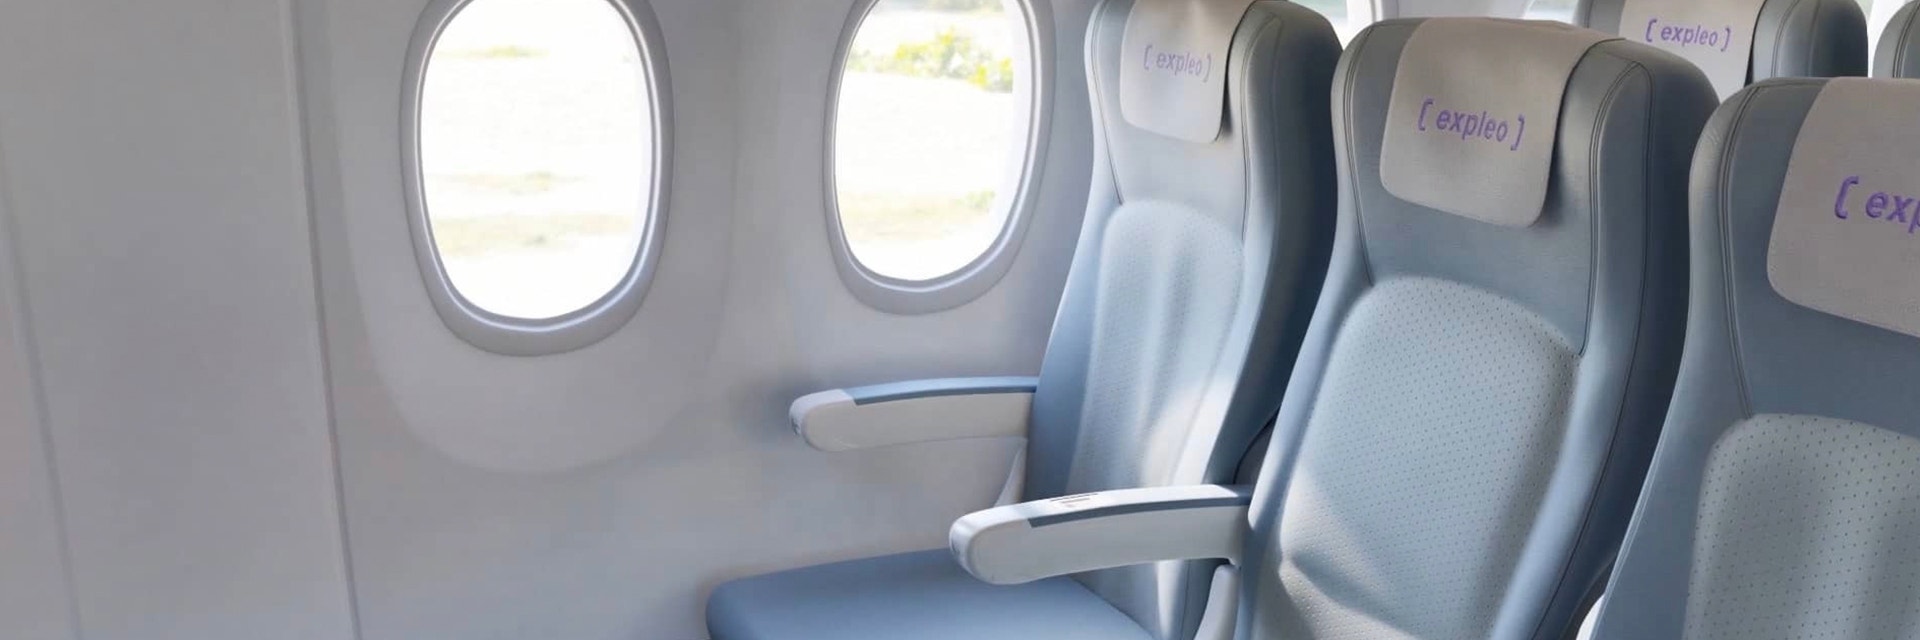 Row of three seats on an aircraft with dado panel visible at base of side wall